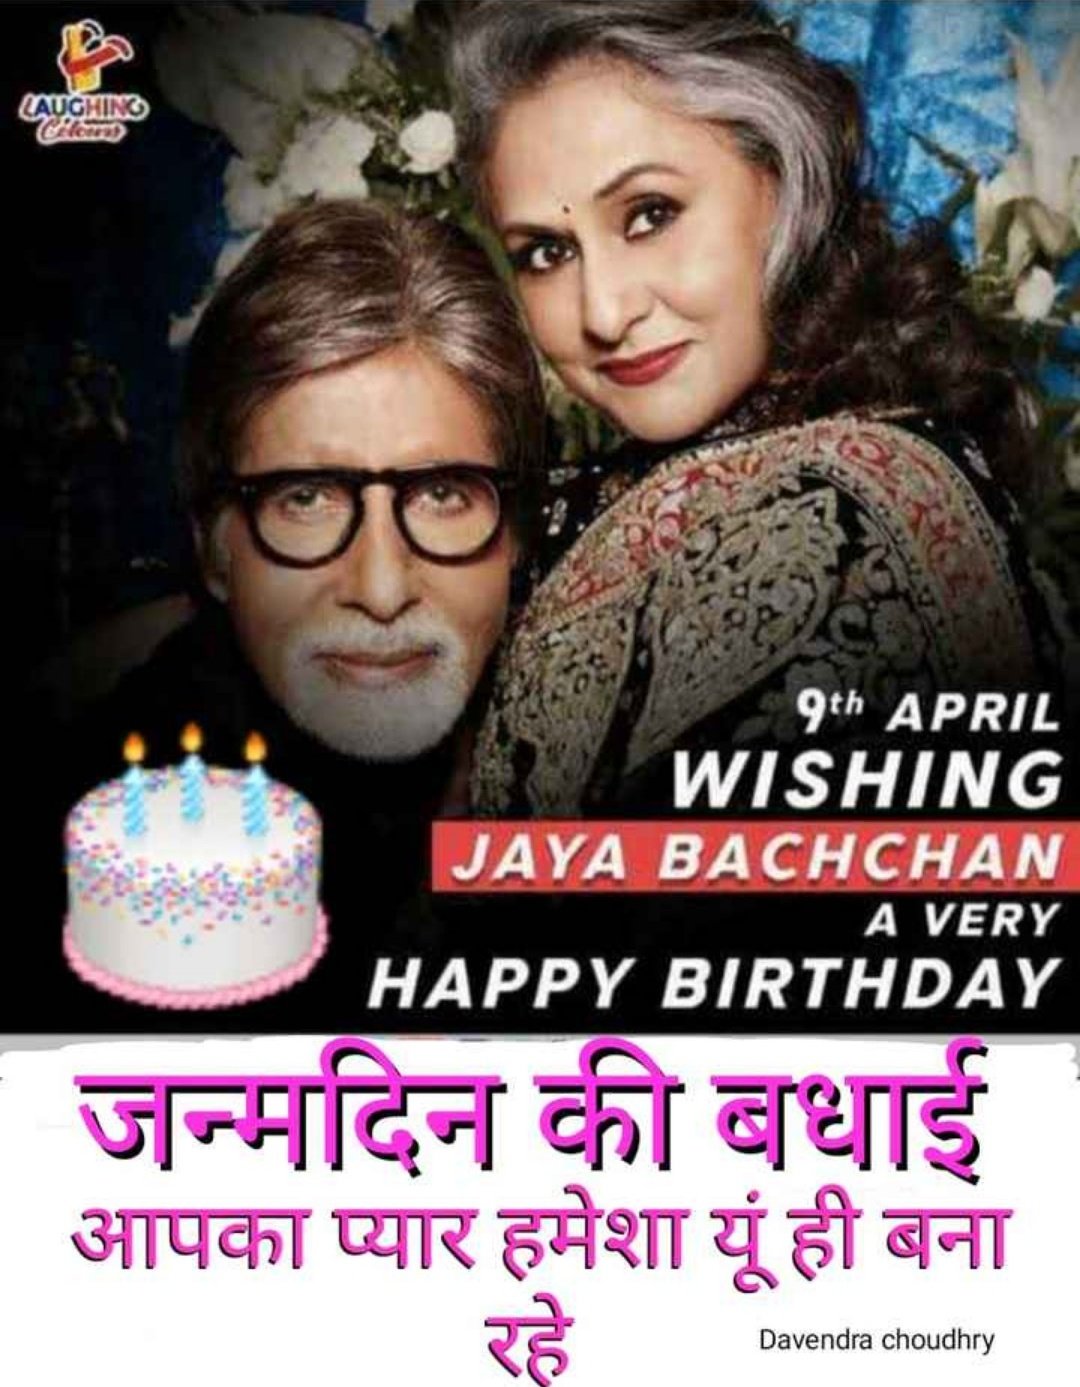  Happy birthday jaya bachchan ji
Live you long life 